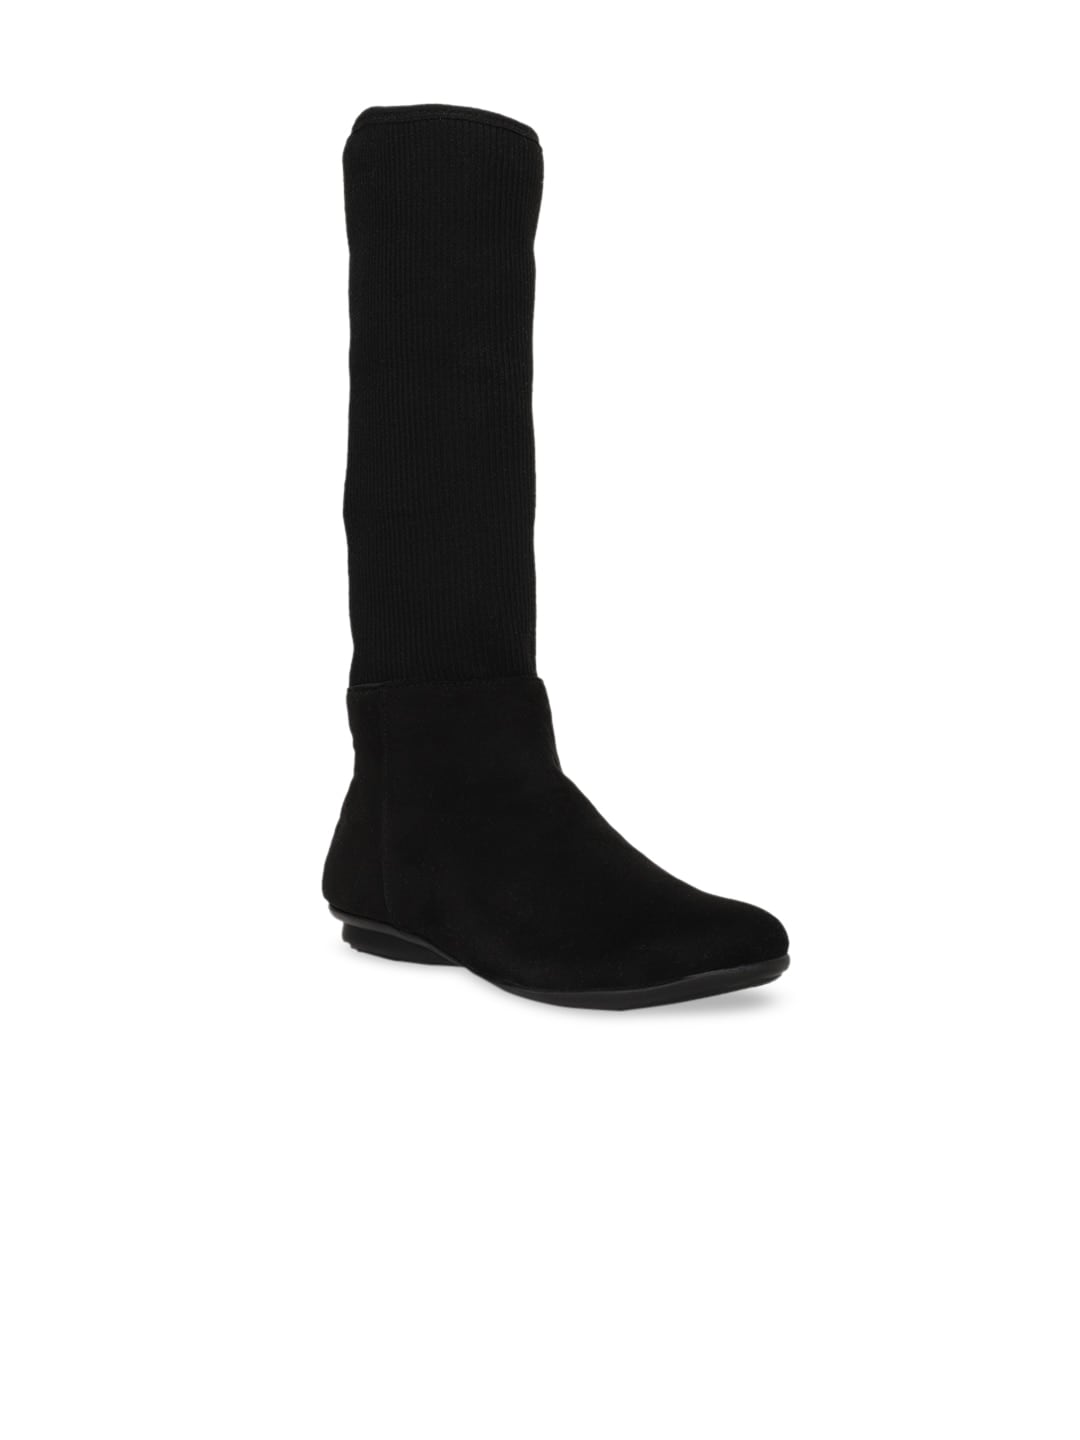 Bruno Manetti Women Black Flat Boots Price in India